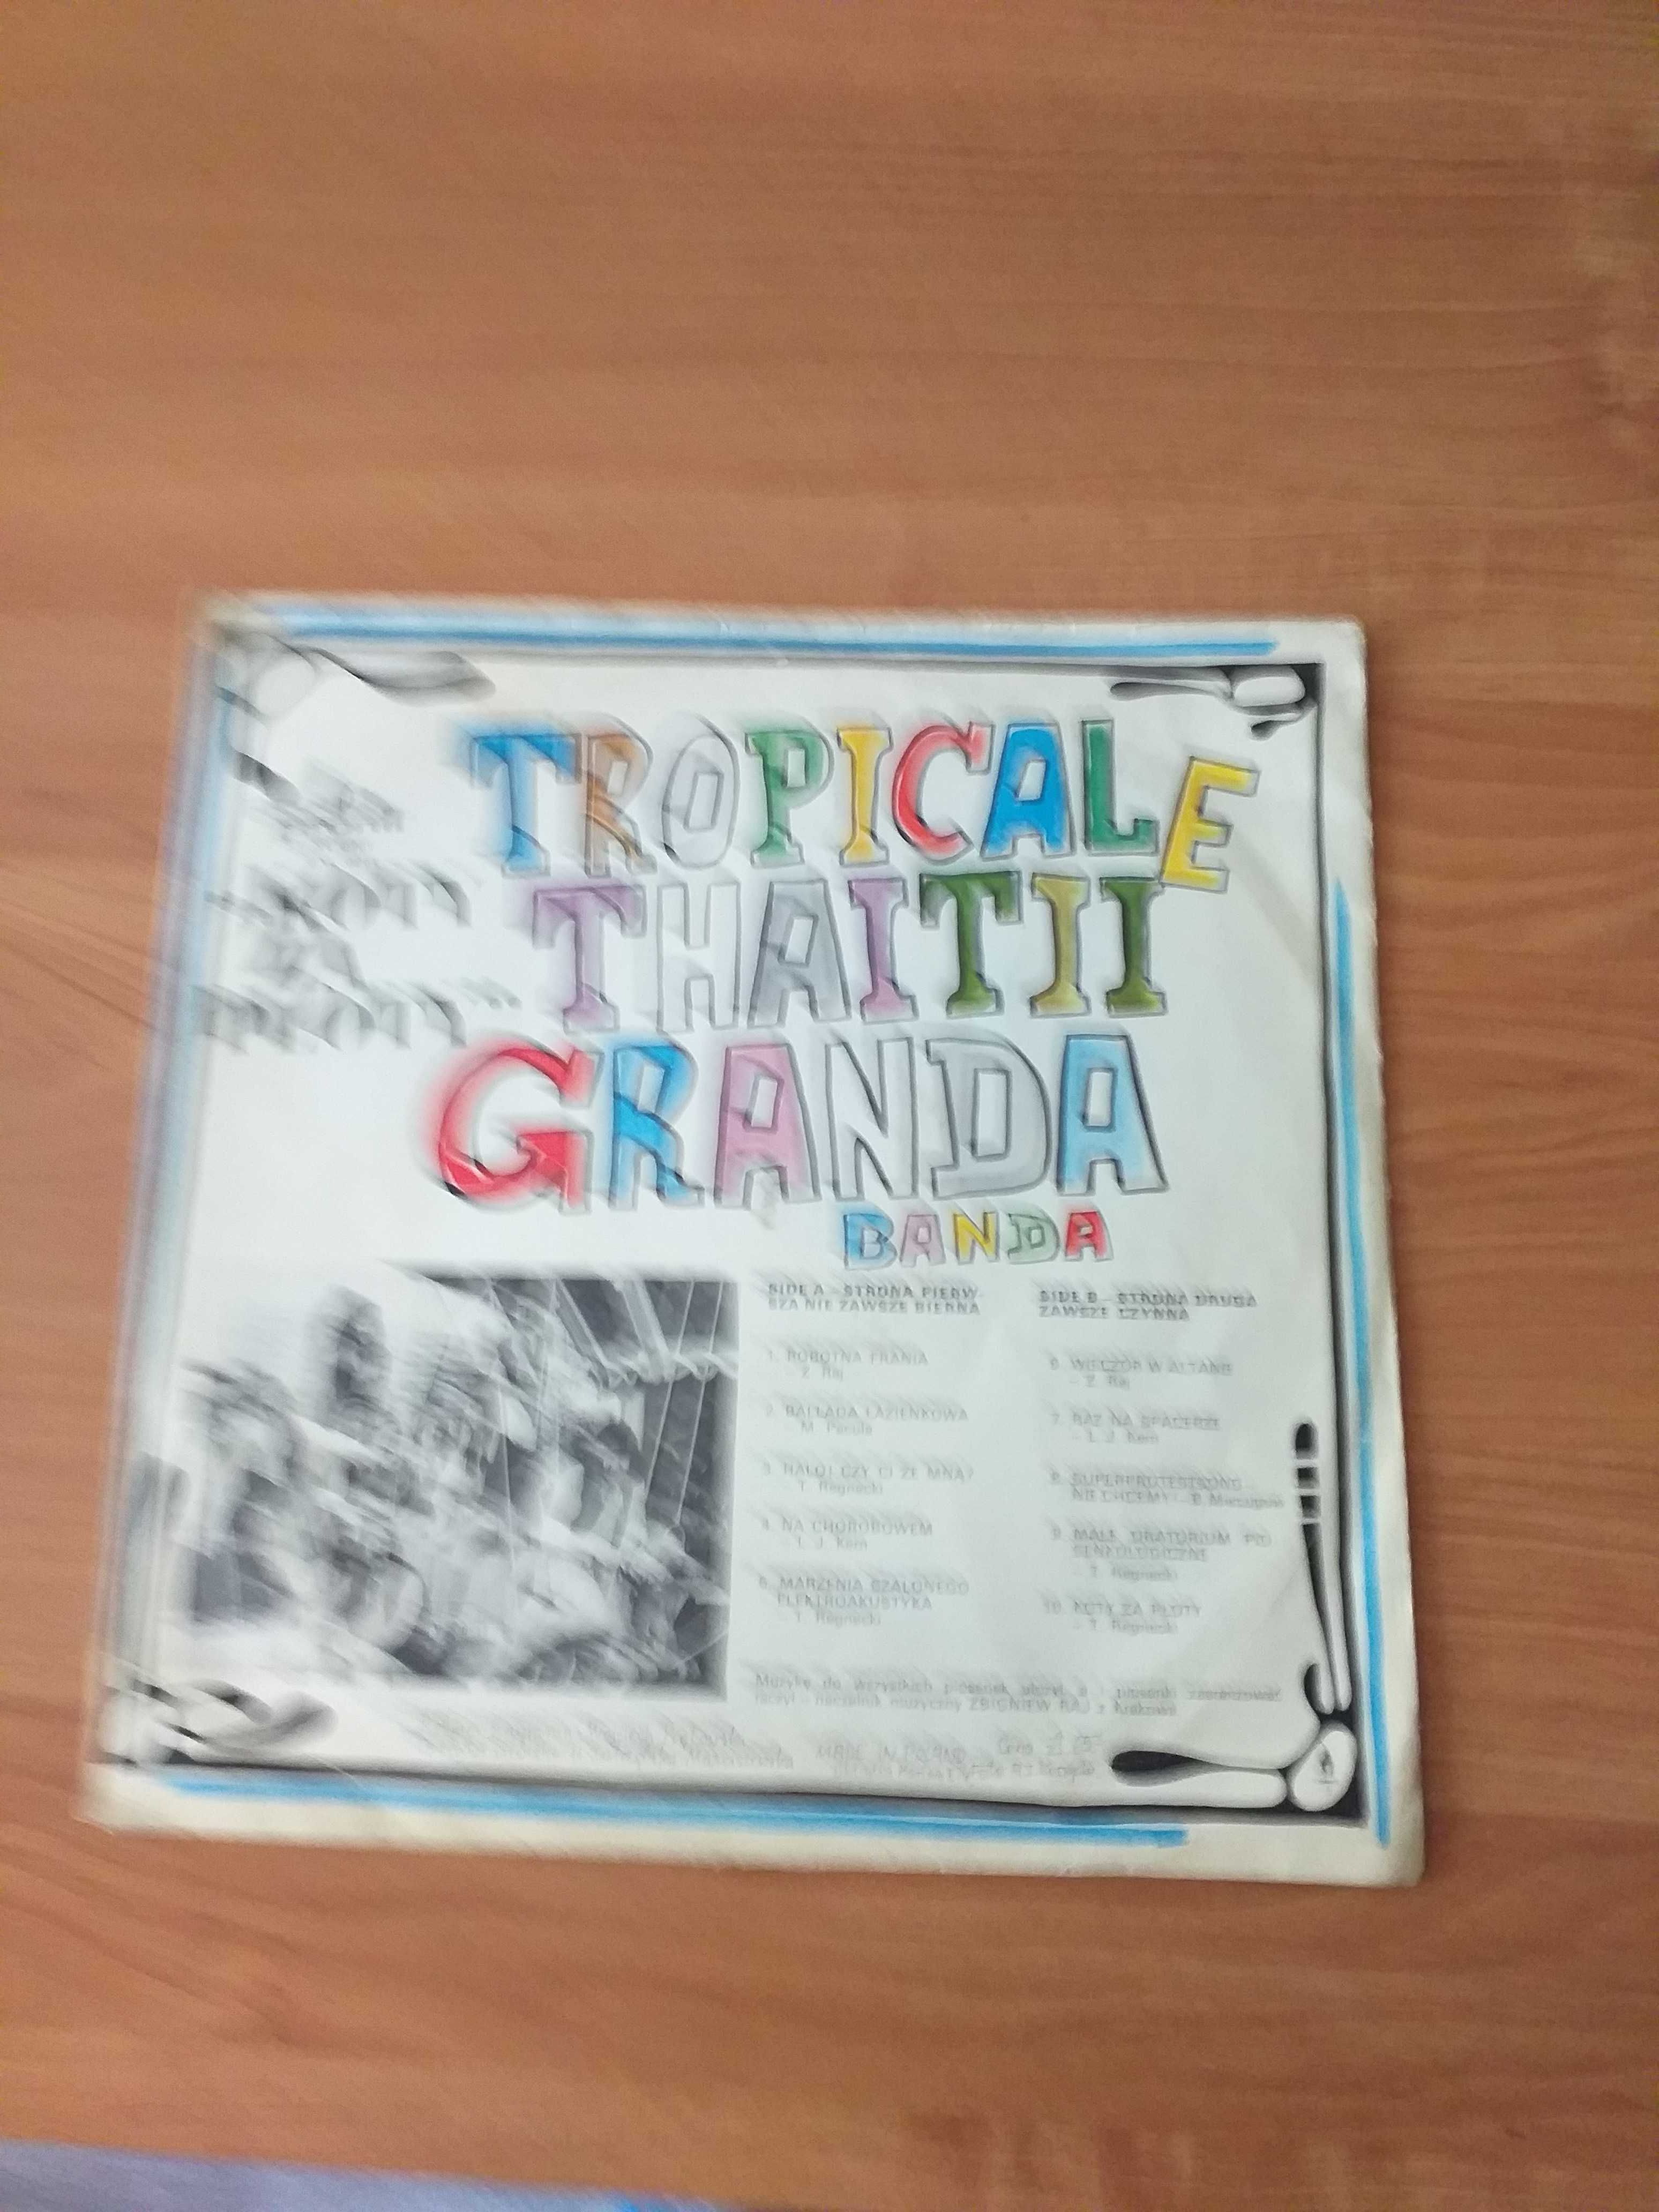 Płyta gramofonowa Tropicale Thaitii Granda